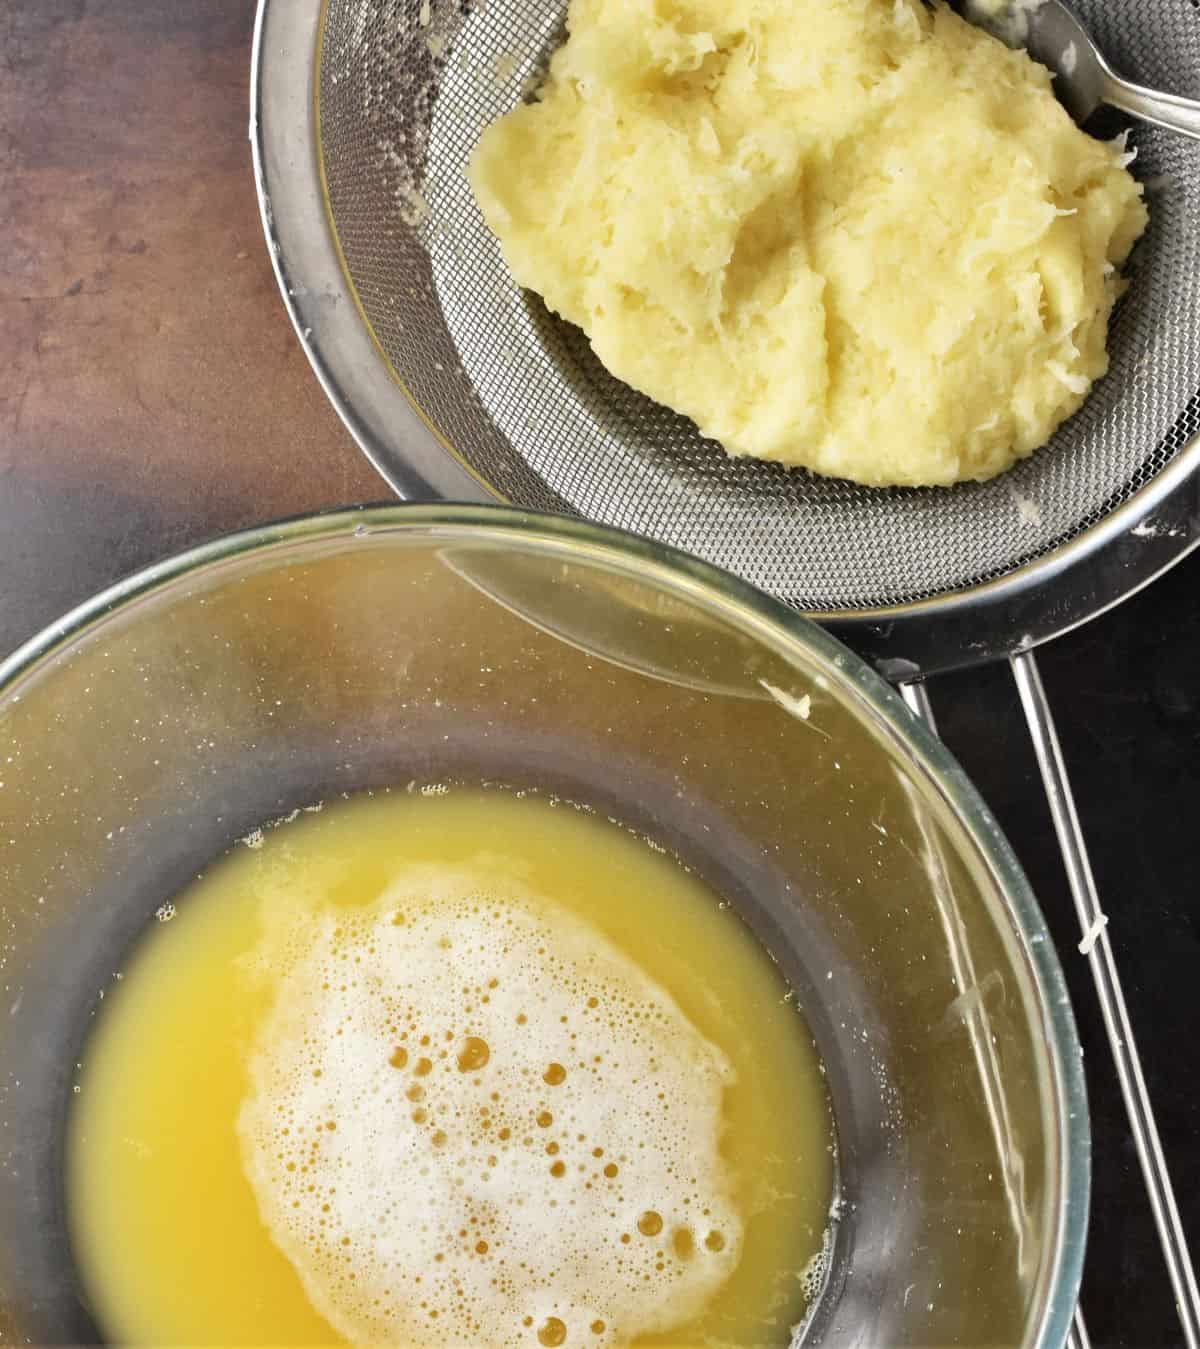 Shredded potato in sieve and potato water in bowl.